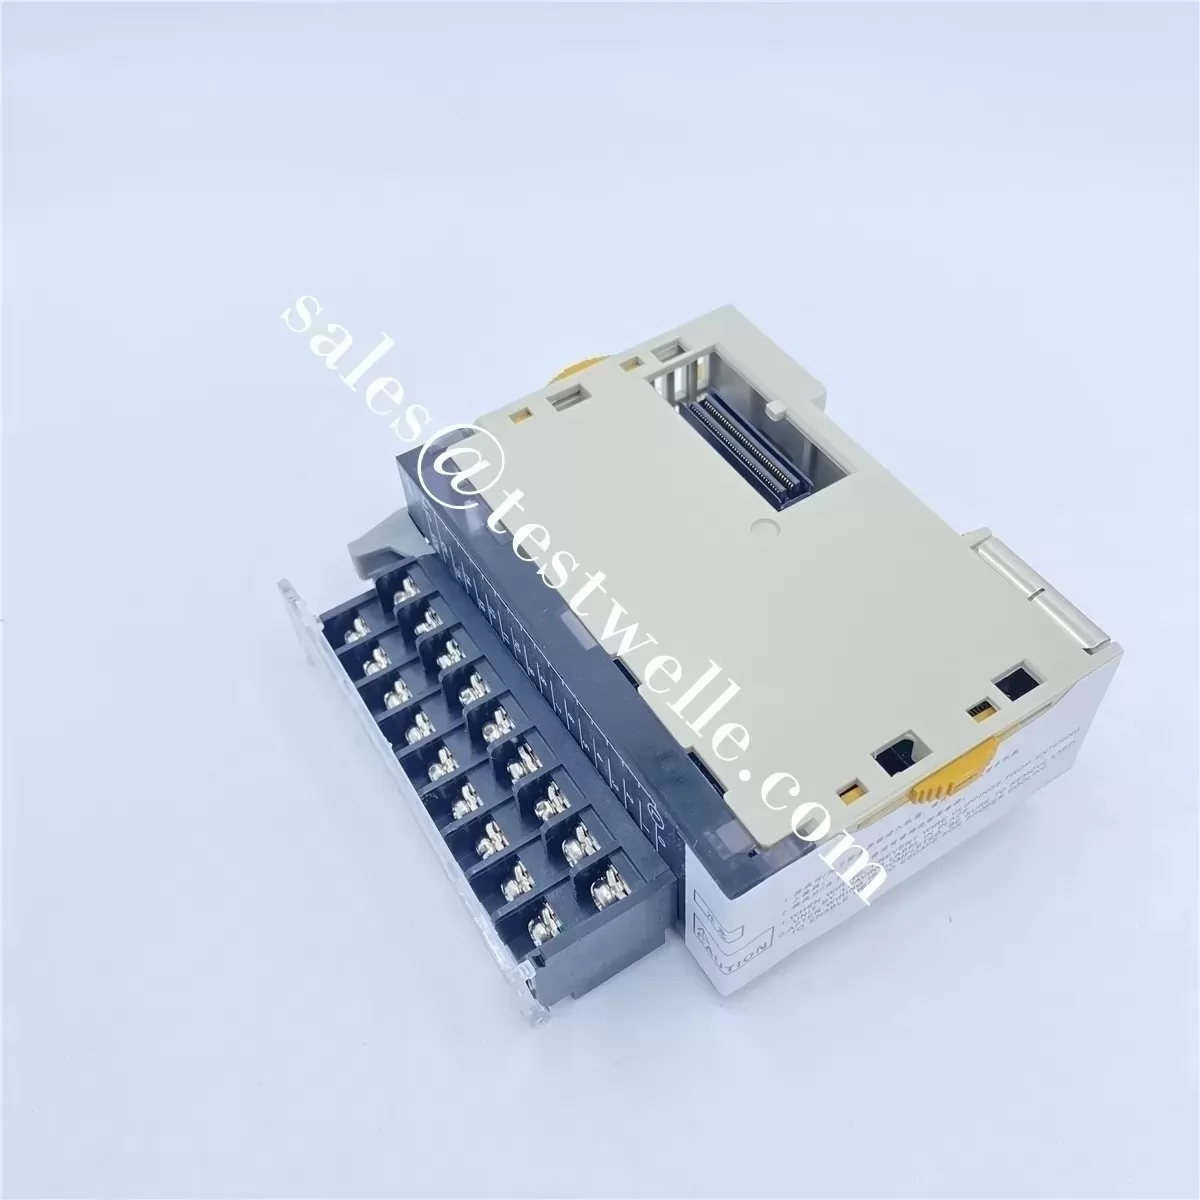 OMRON low cost PLC CS1G-CPU42-V1